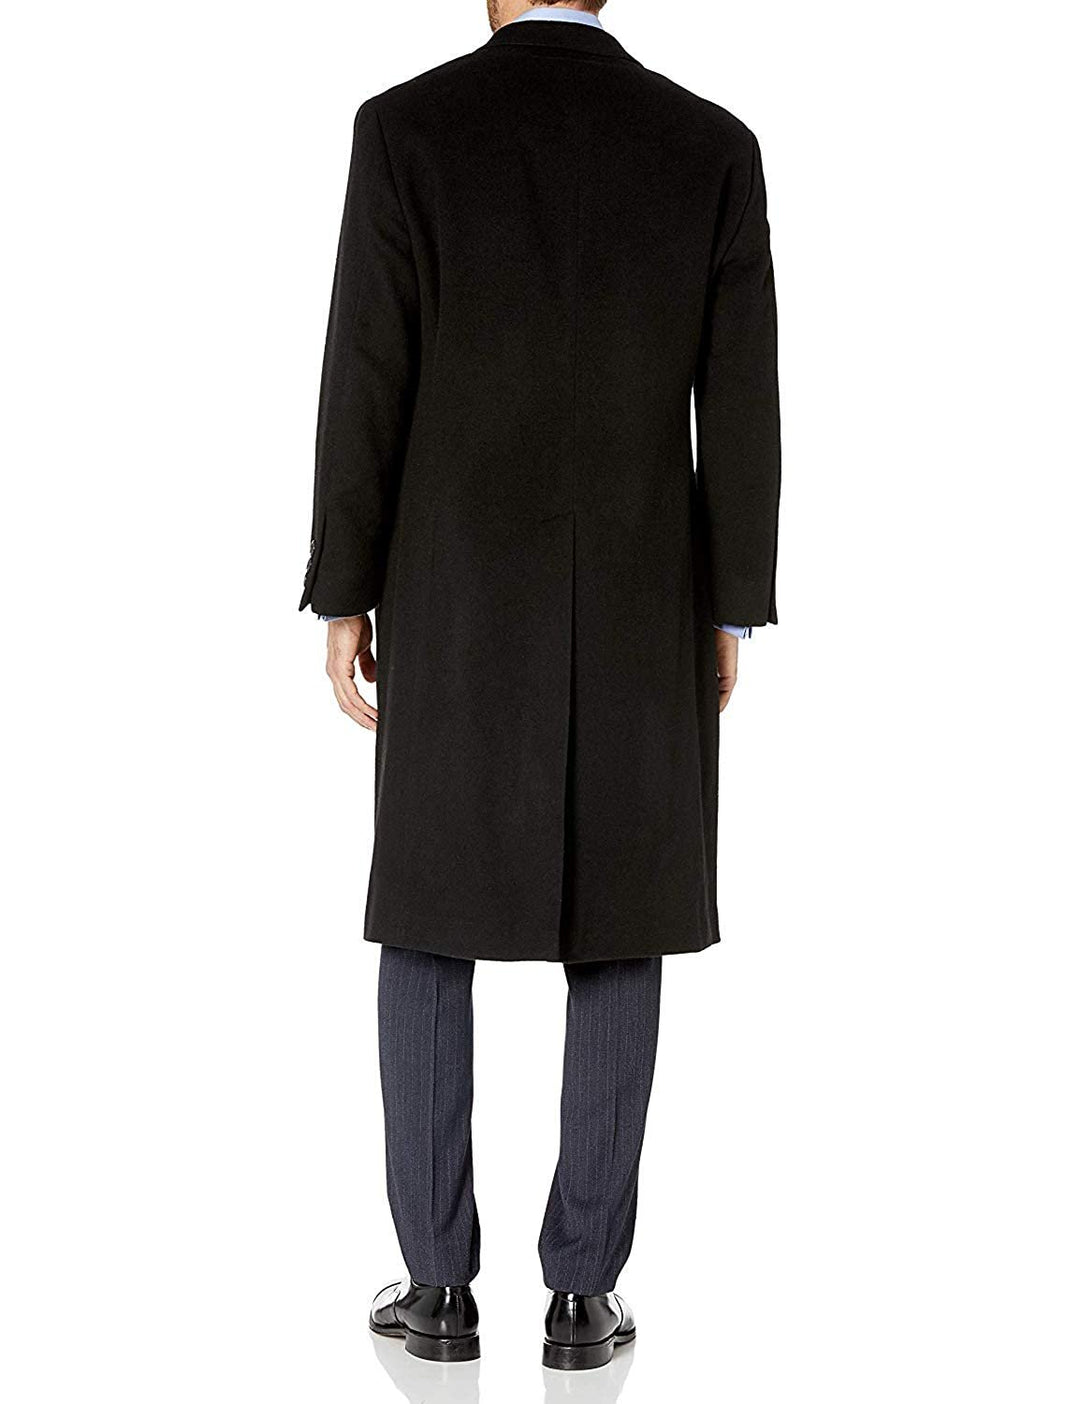 Hart Schaffner Marx Men's Single Breasted Overcoat Luxury Wool Full Length Insulated Topcoat